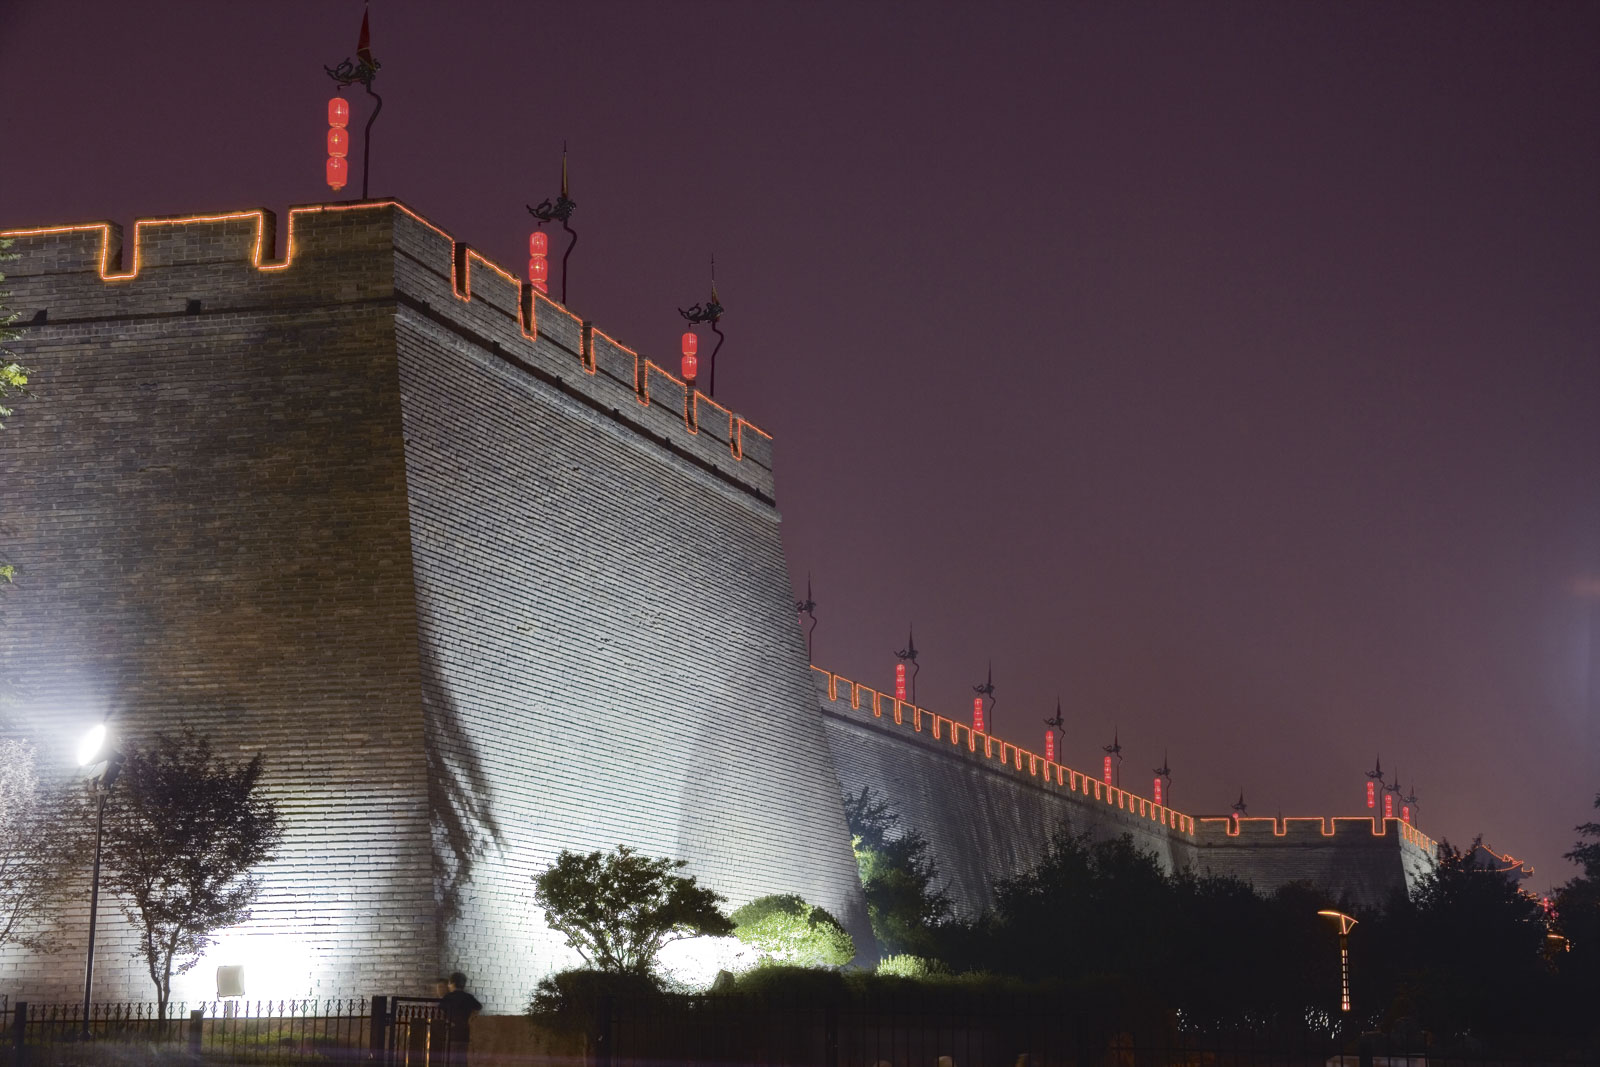 City wall of Xi'an China